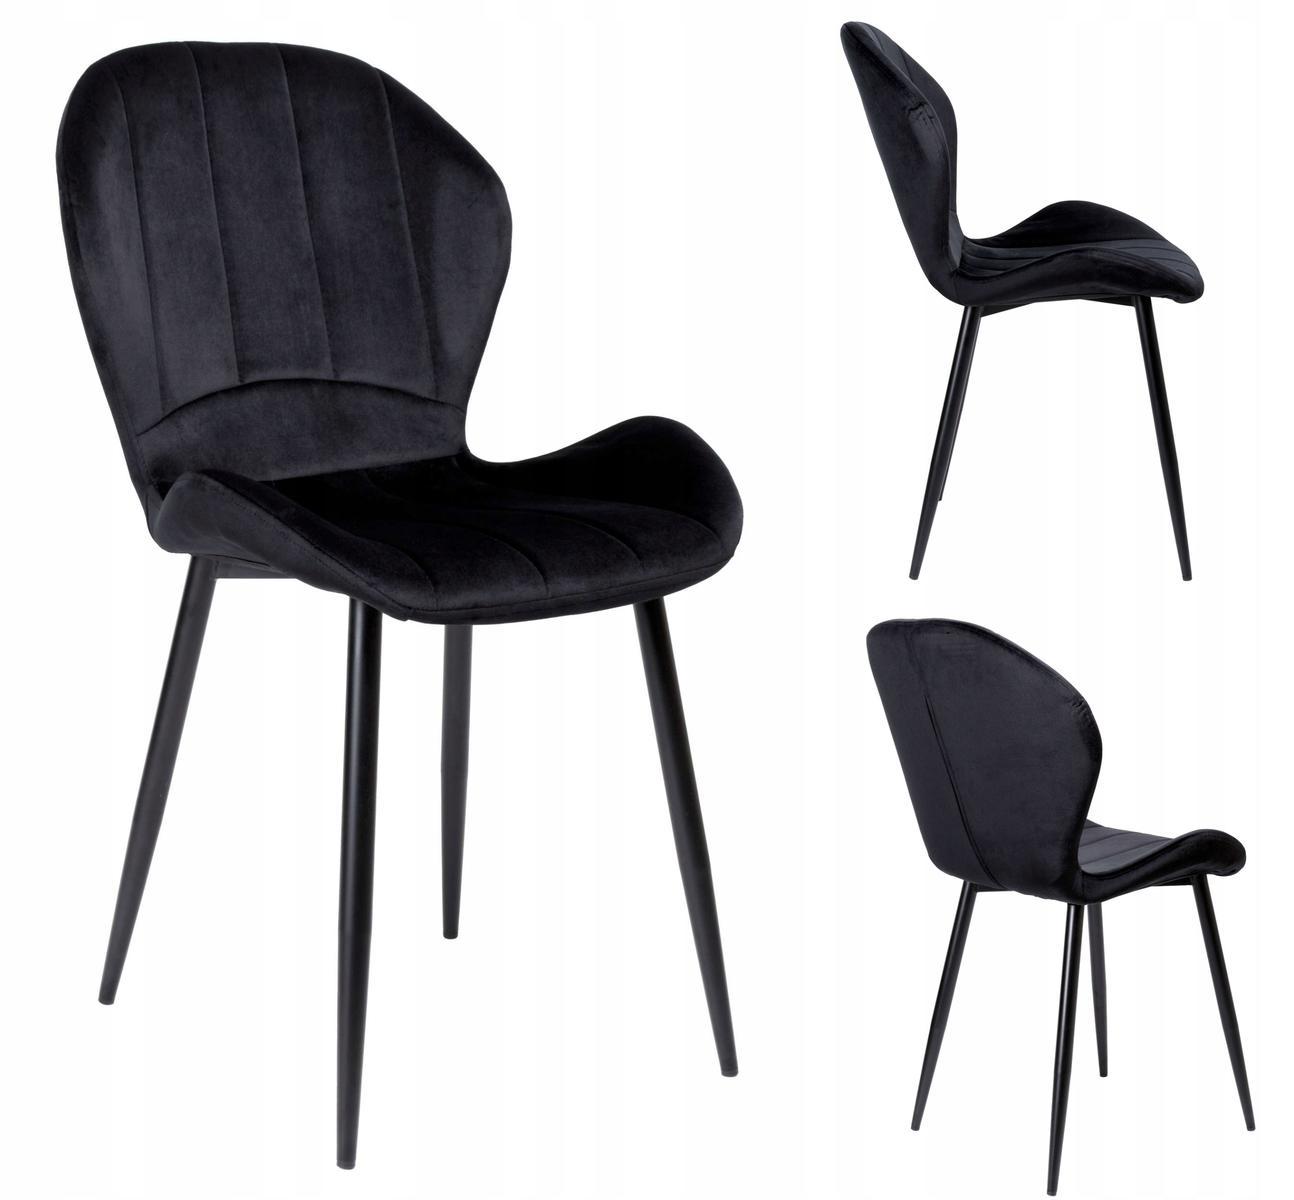 Krzesło welurowe 50x88x57 cm profilowane fotel SHELBY VELVET czarne czarne nóżki do jadalni lub salonu 0 Full Screen